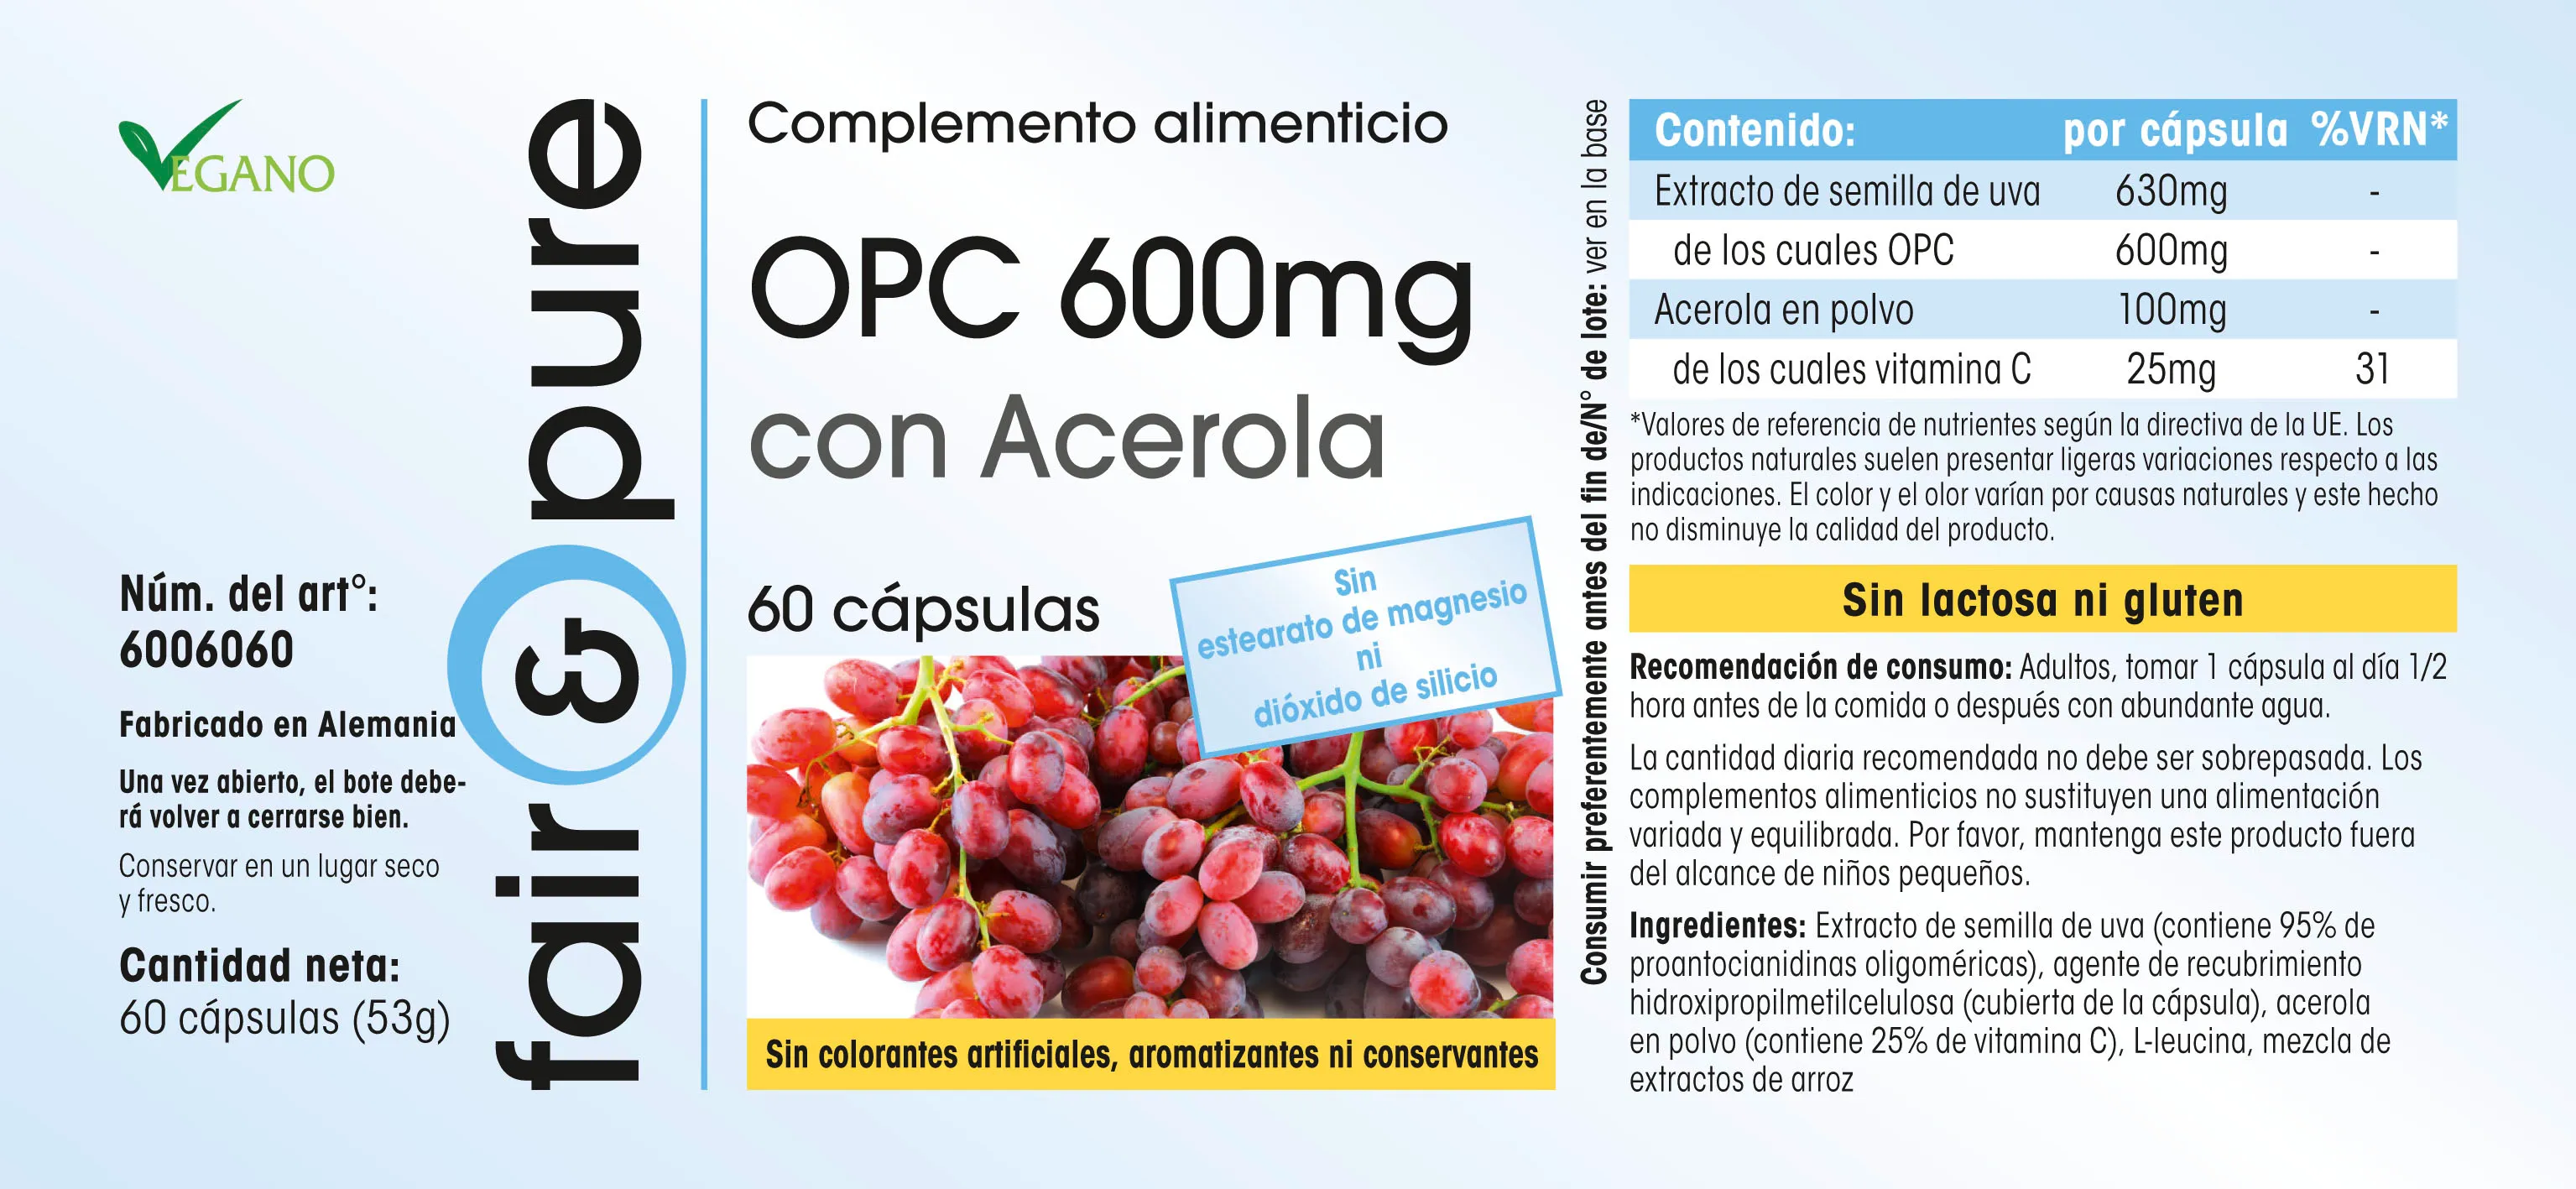 OPC 600mg + Acérola